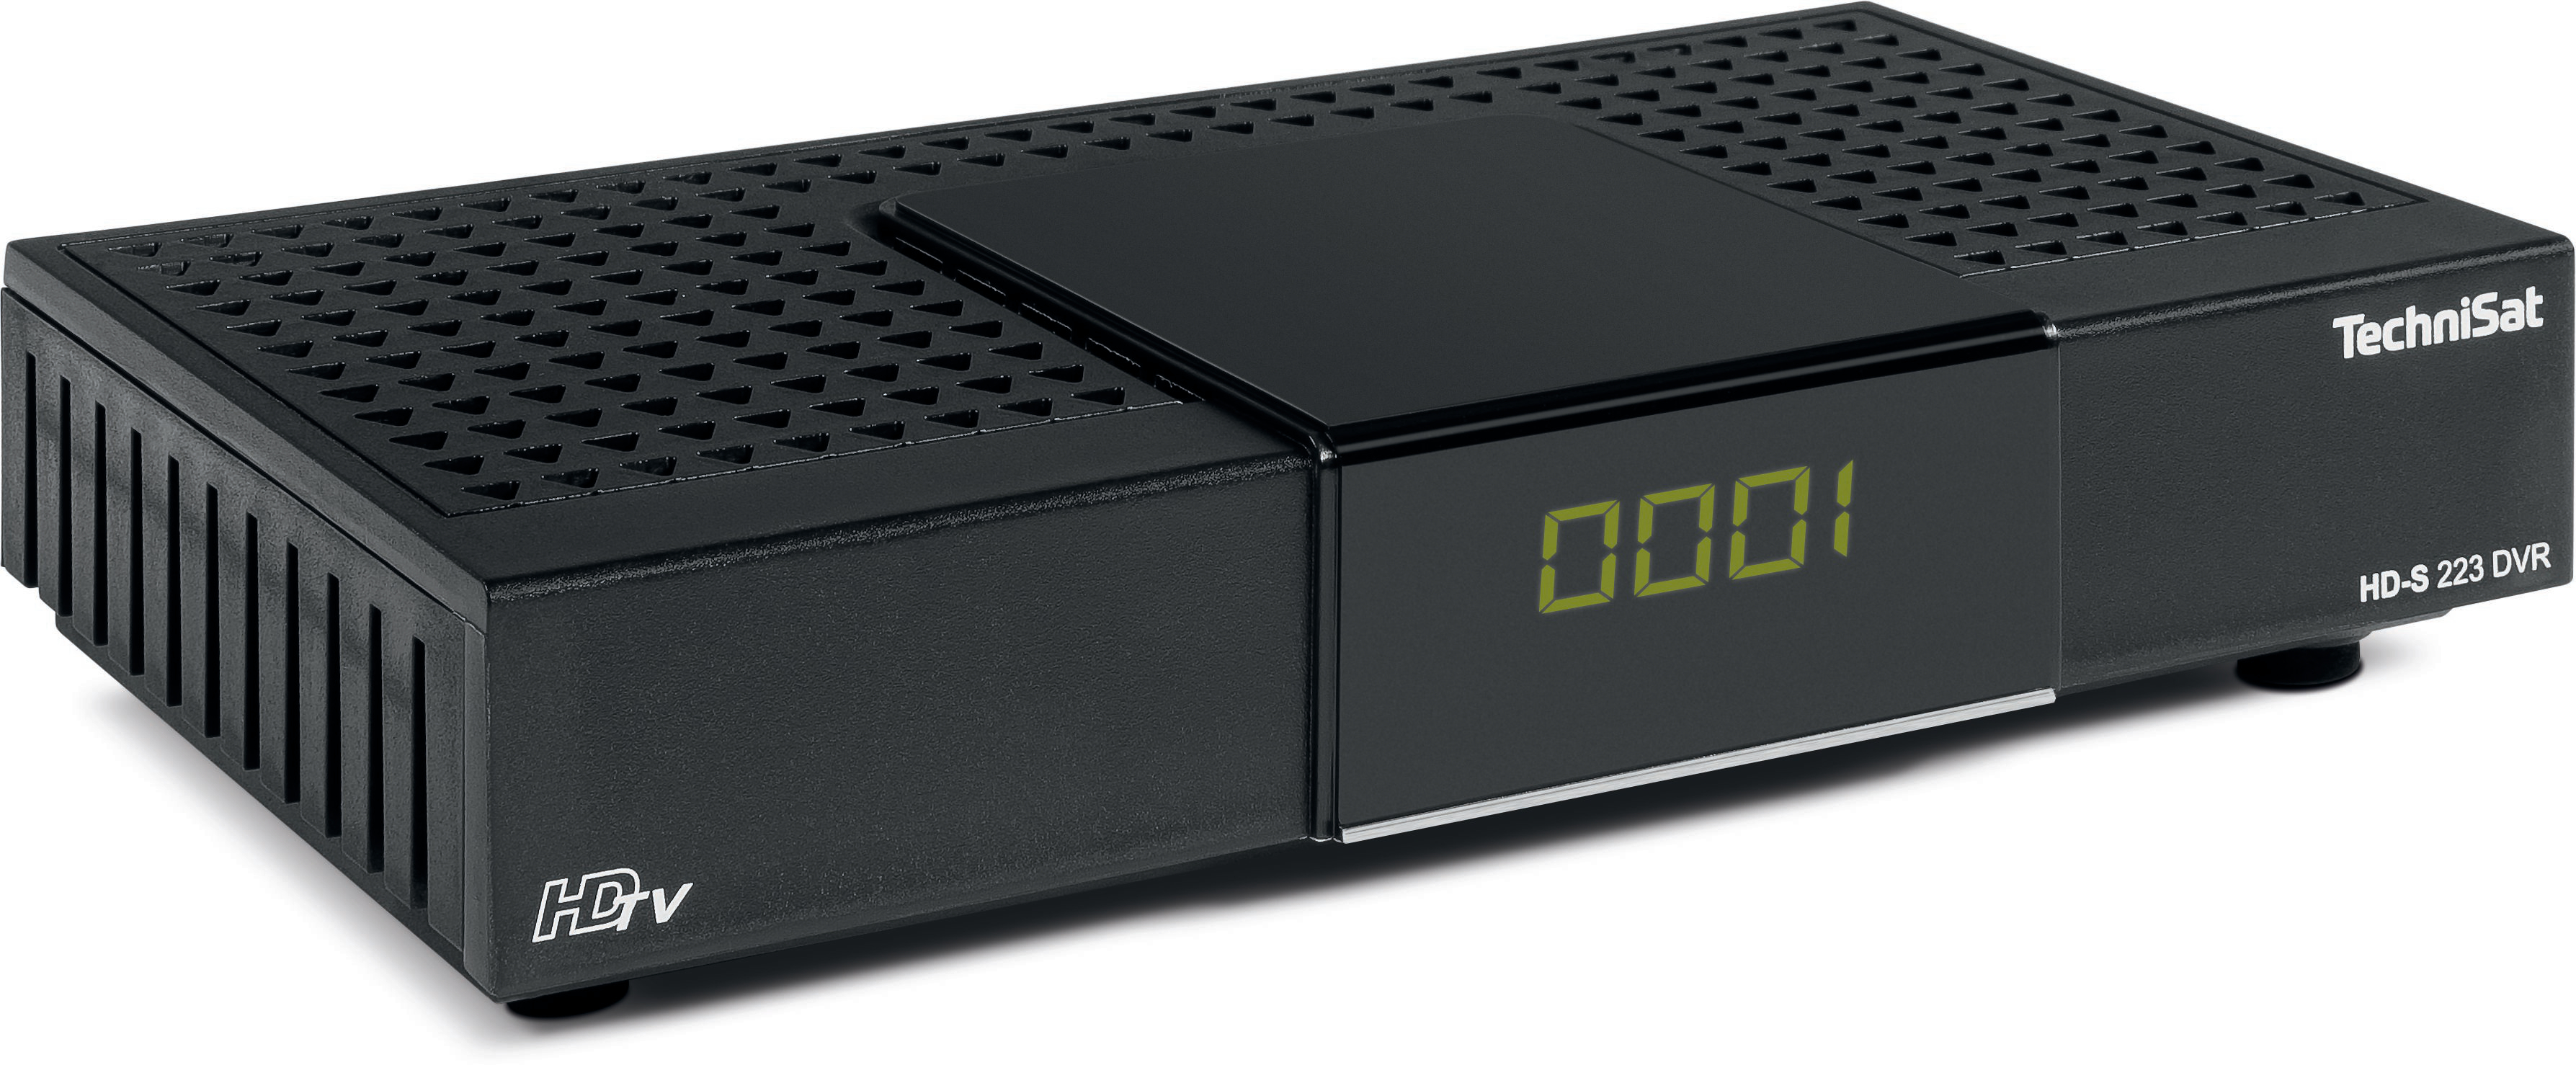 TECHNISAT HD-S 223 DVR Schwarz) DVB-S2, (DVB-S, DigitalSat-Receiver HDTV